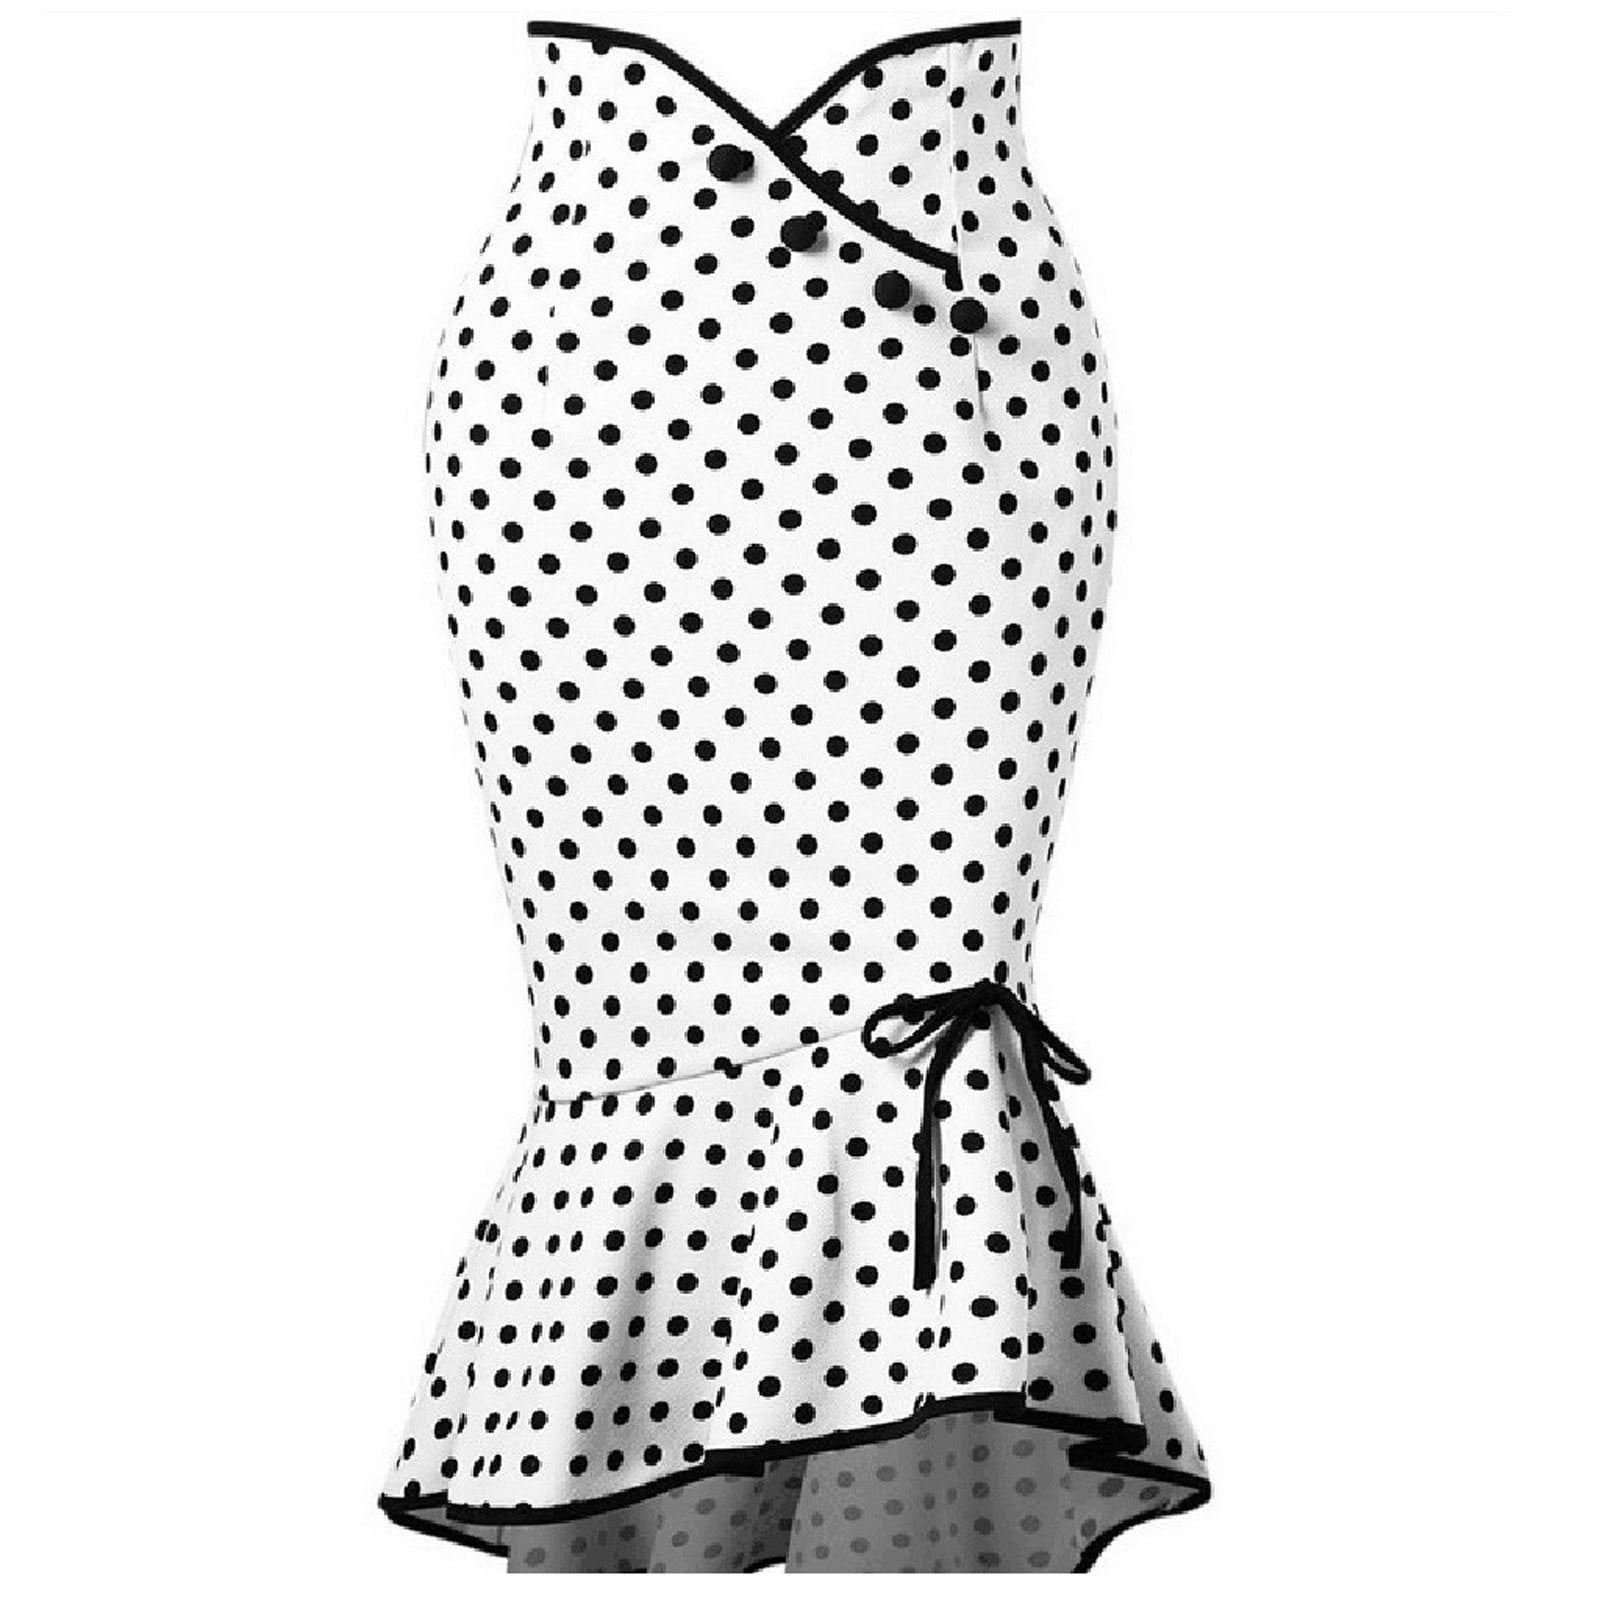 Wozhidaoke skirts for women Polka Dot Botton Ruffles Tight-Fitting ...